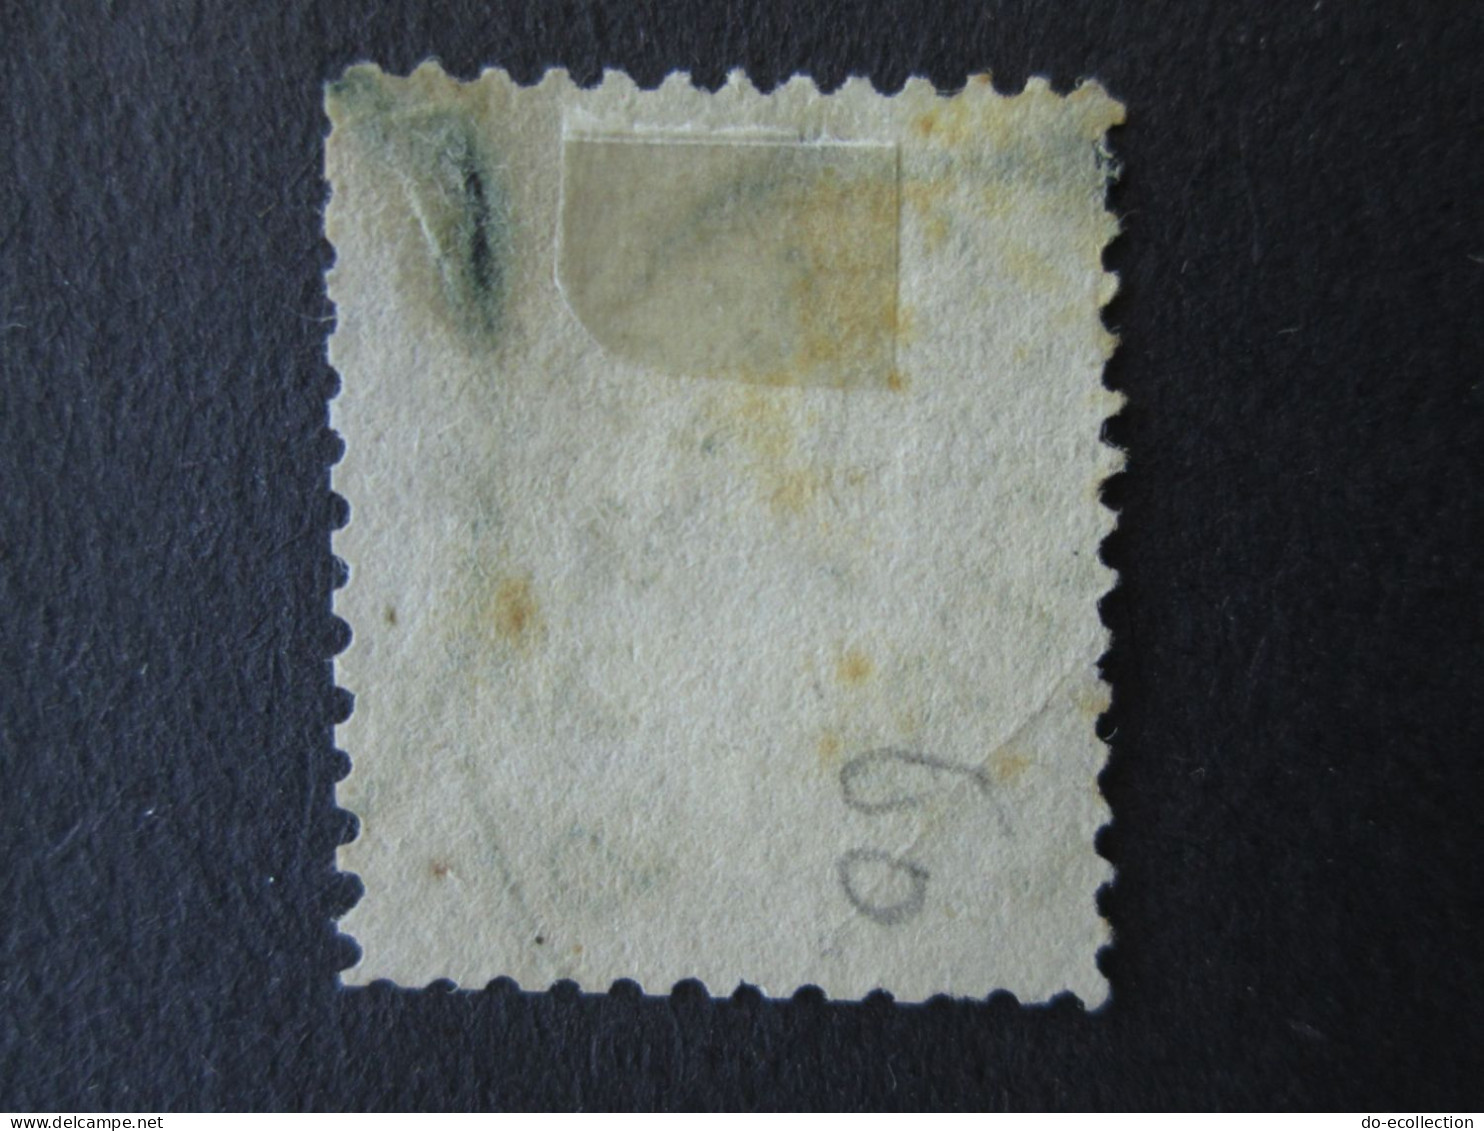 BELGIQUE 4 timbres 1c 1866 Bruges 50c 1883 2f 1884 Anvers 50c 1893 Chancellerie Leopold II Belgie Belgium timbre stamps